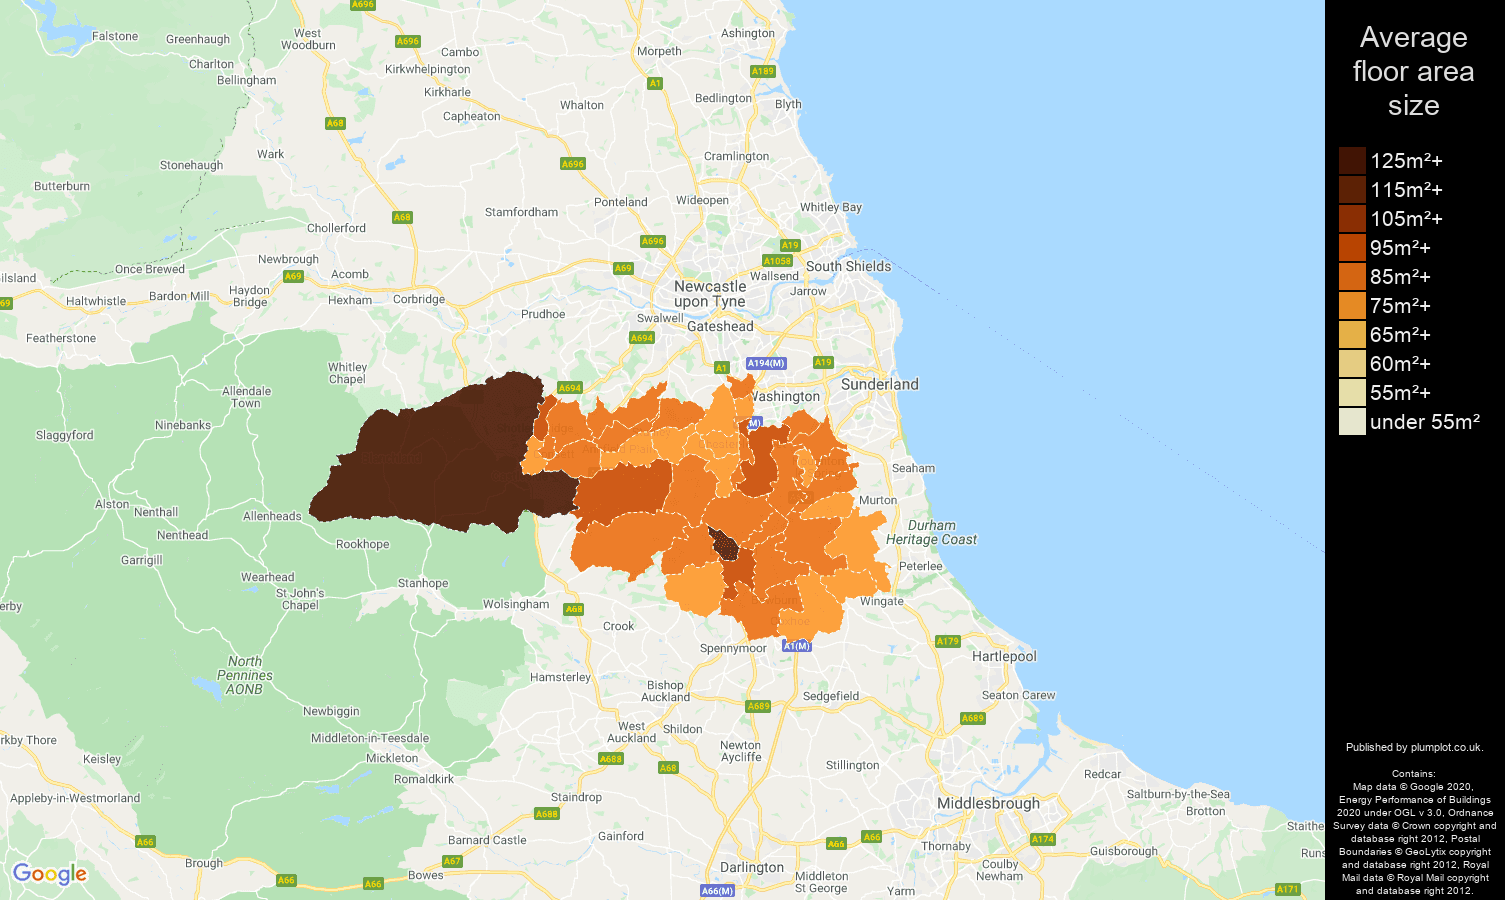 Durham map of average floor area size of properties